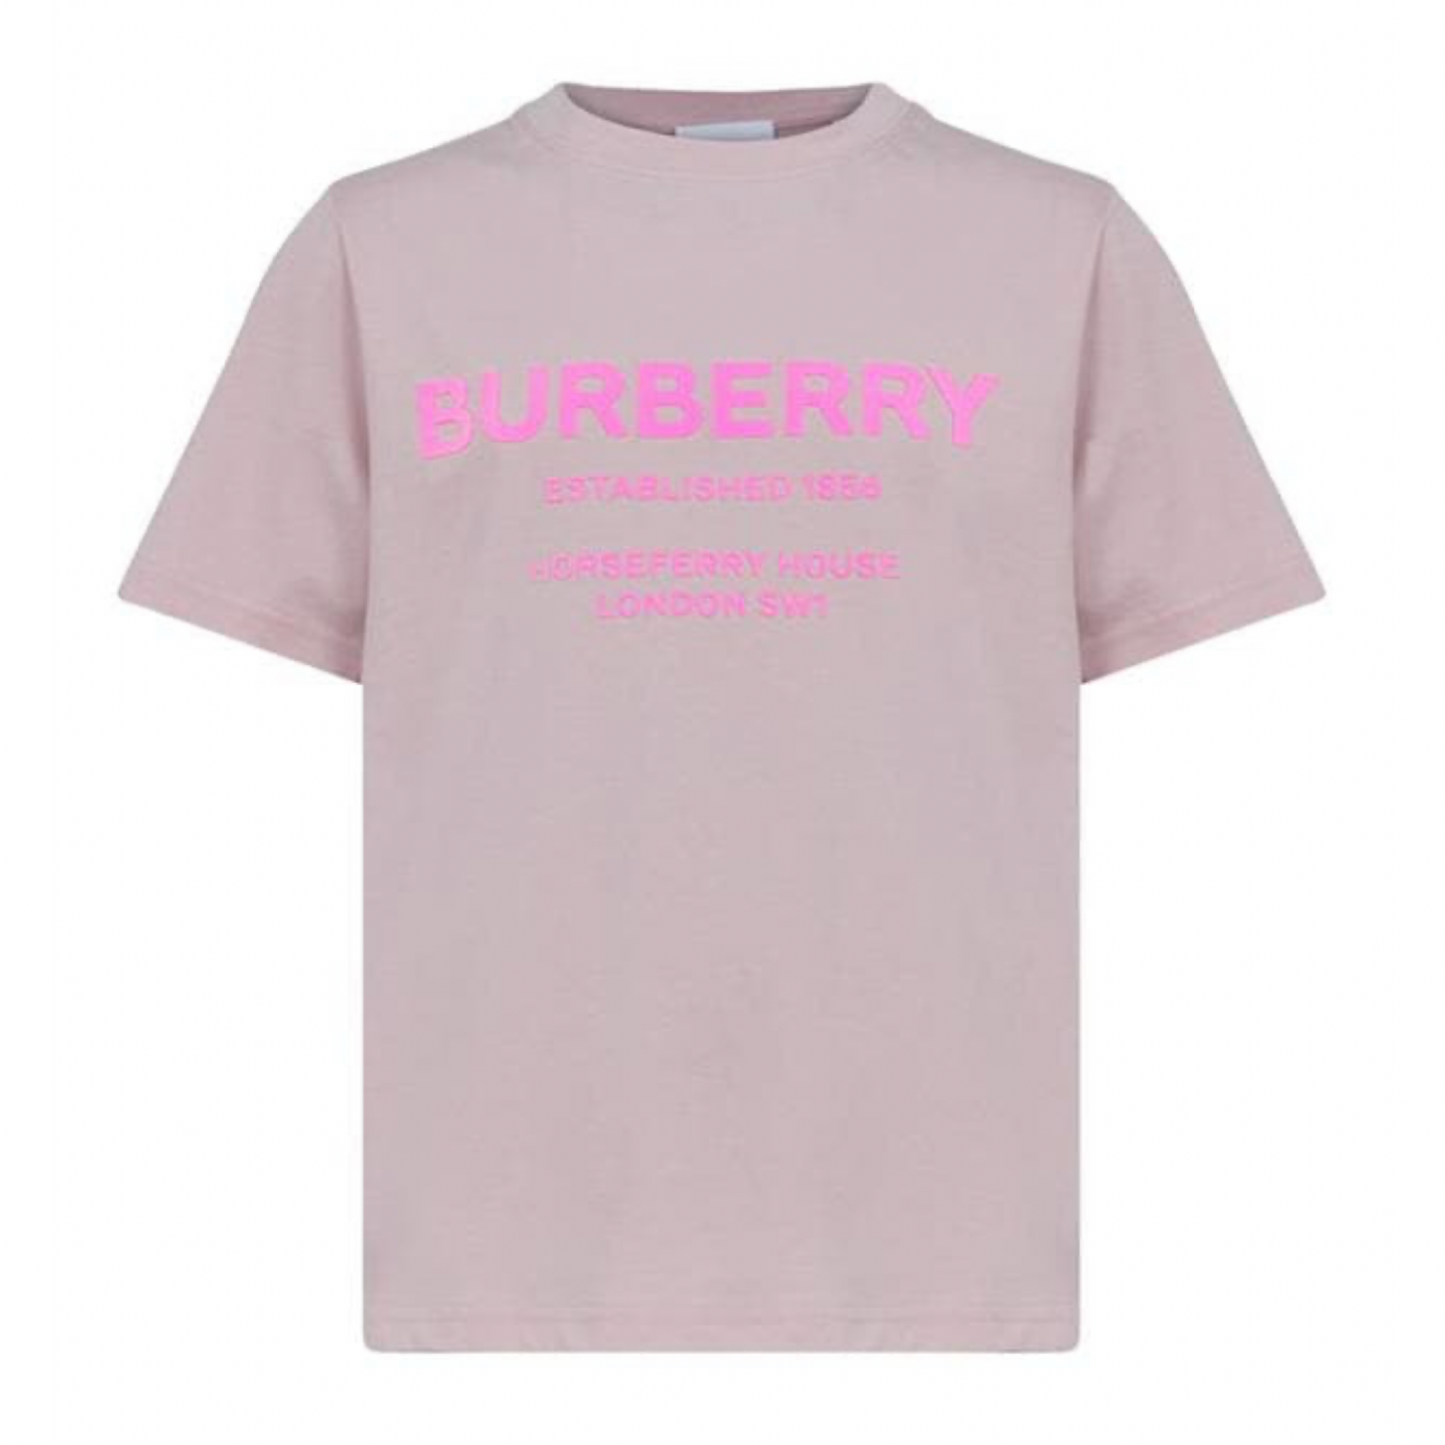 Girls Burberry Bristle T Shirt - DANYOUNGUK